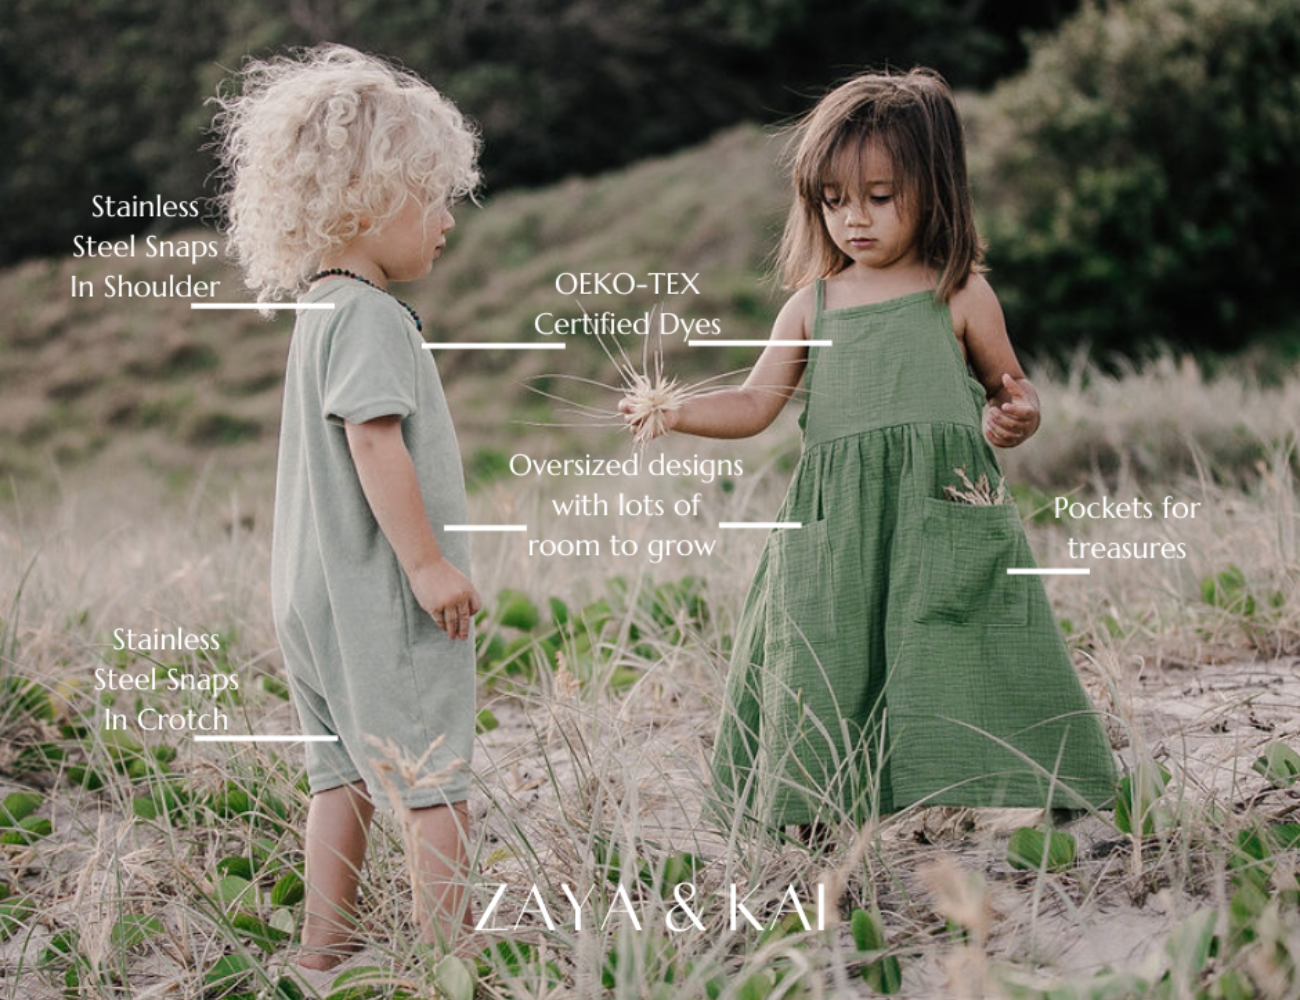 
                  
                    maxi muslin dress wabi sabi green oversized terry towel jumpsuit honeydew baby toddler sustainable clothing byron bay brand Zaya and Kai
                  
                